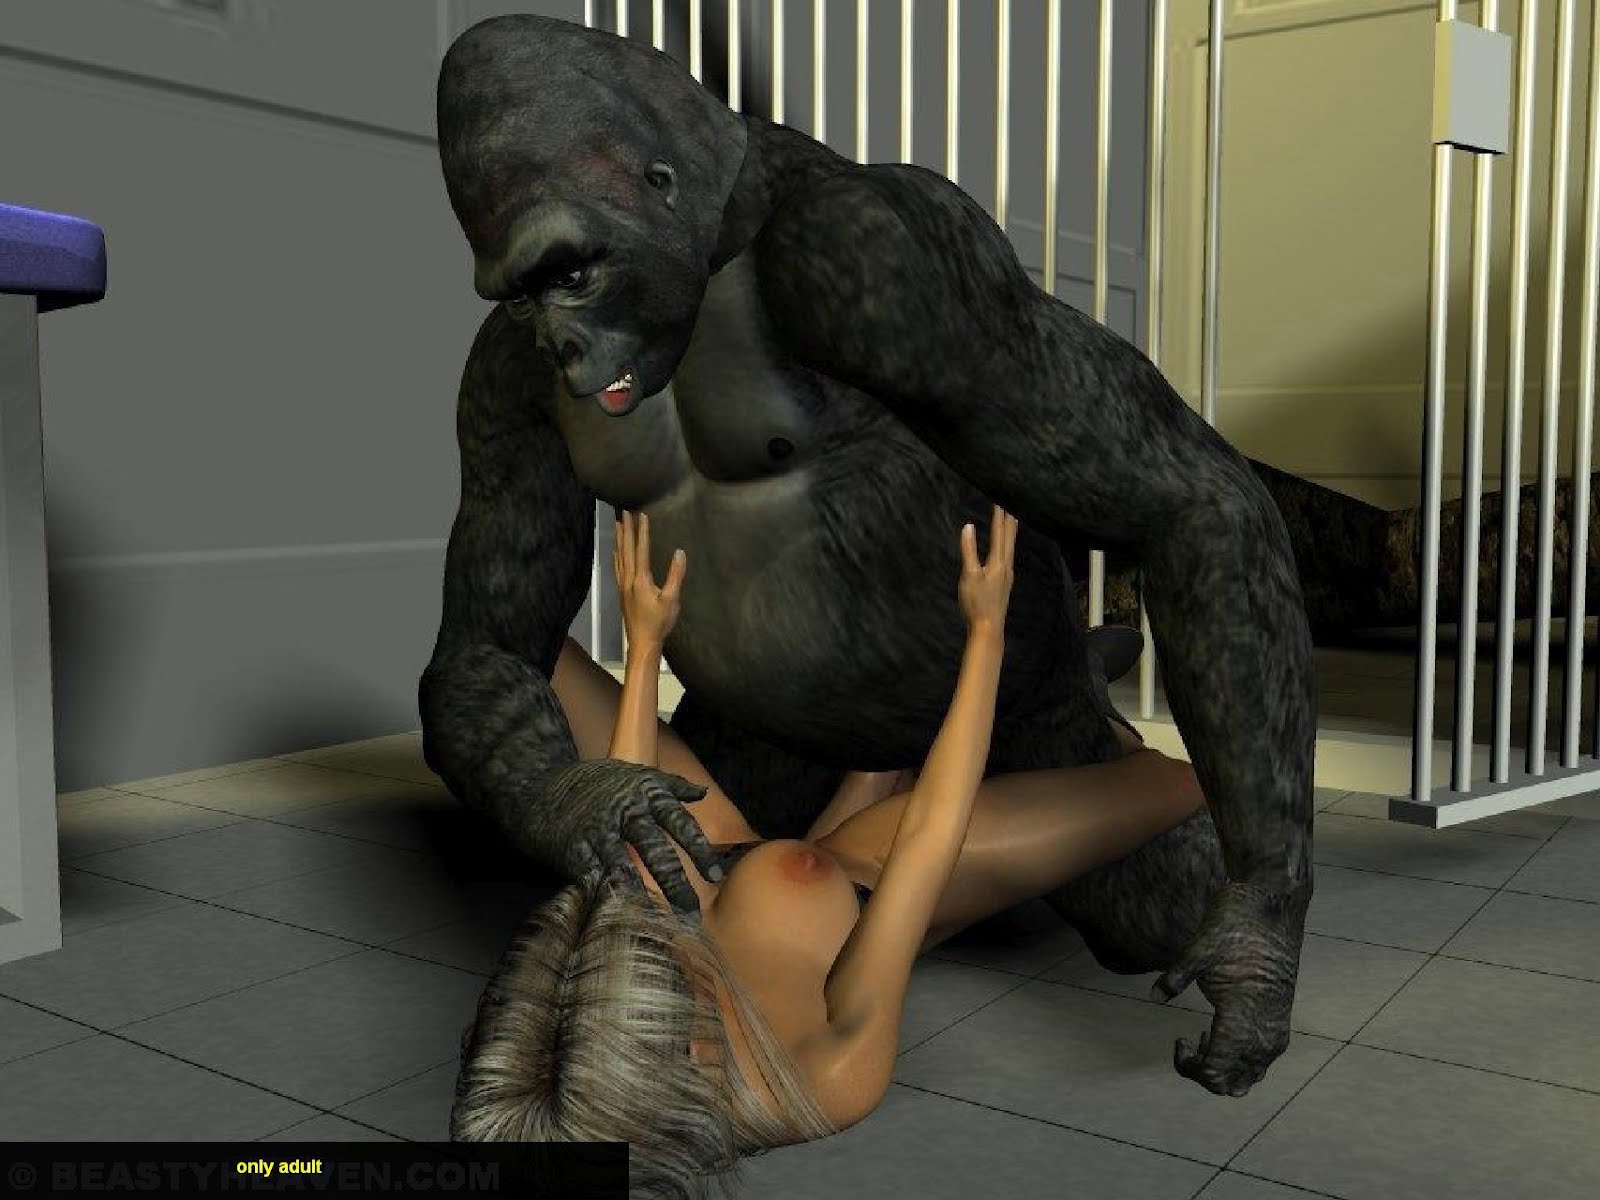 Girl And Gorilla Sex Bf - Gorilla Sex Porn | Sex Pictures Pass